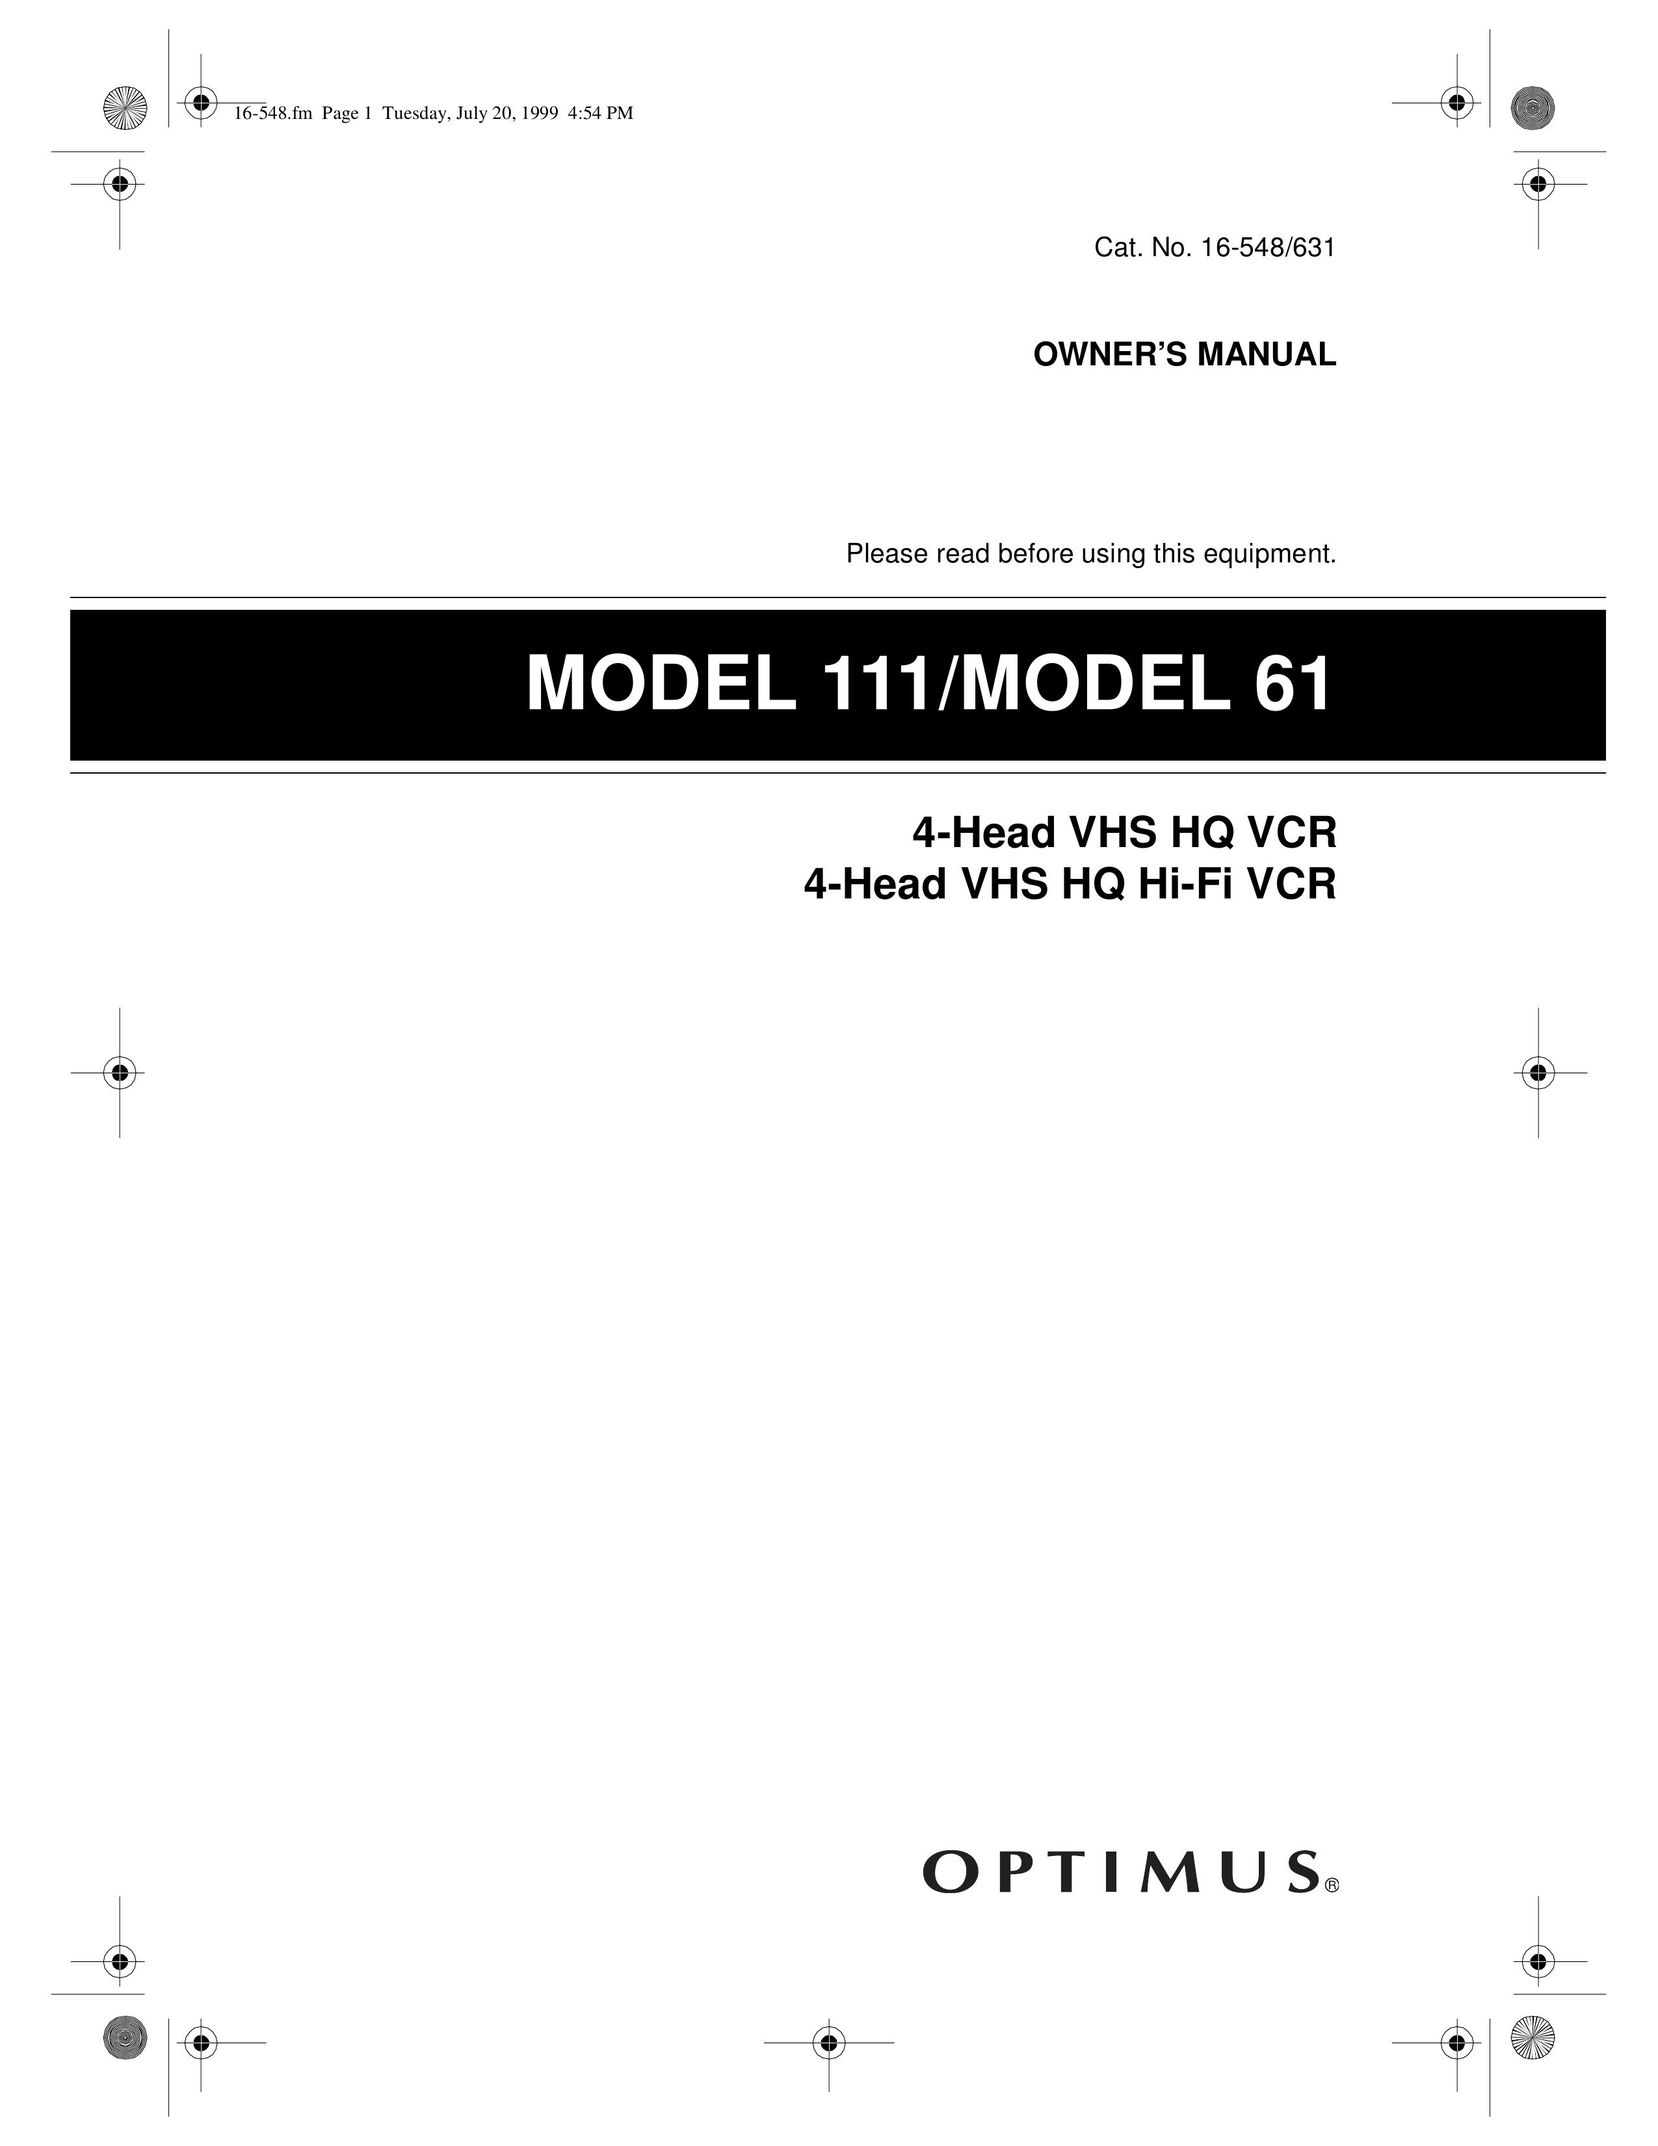 Optimus - Katadyn Products Inc. MODEL 61 VCR User Manual